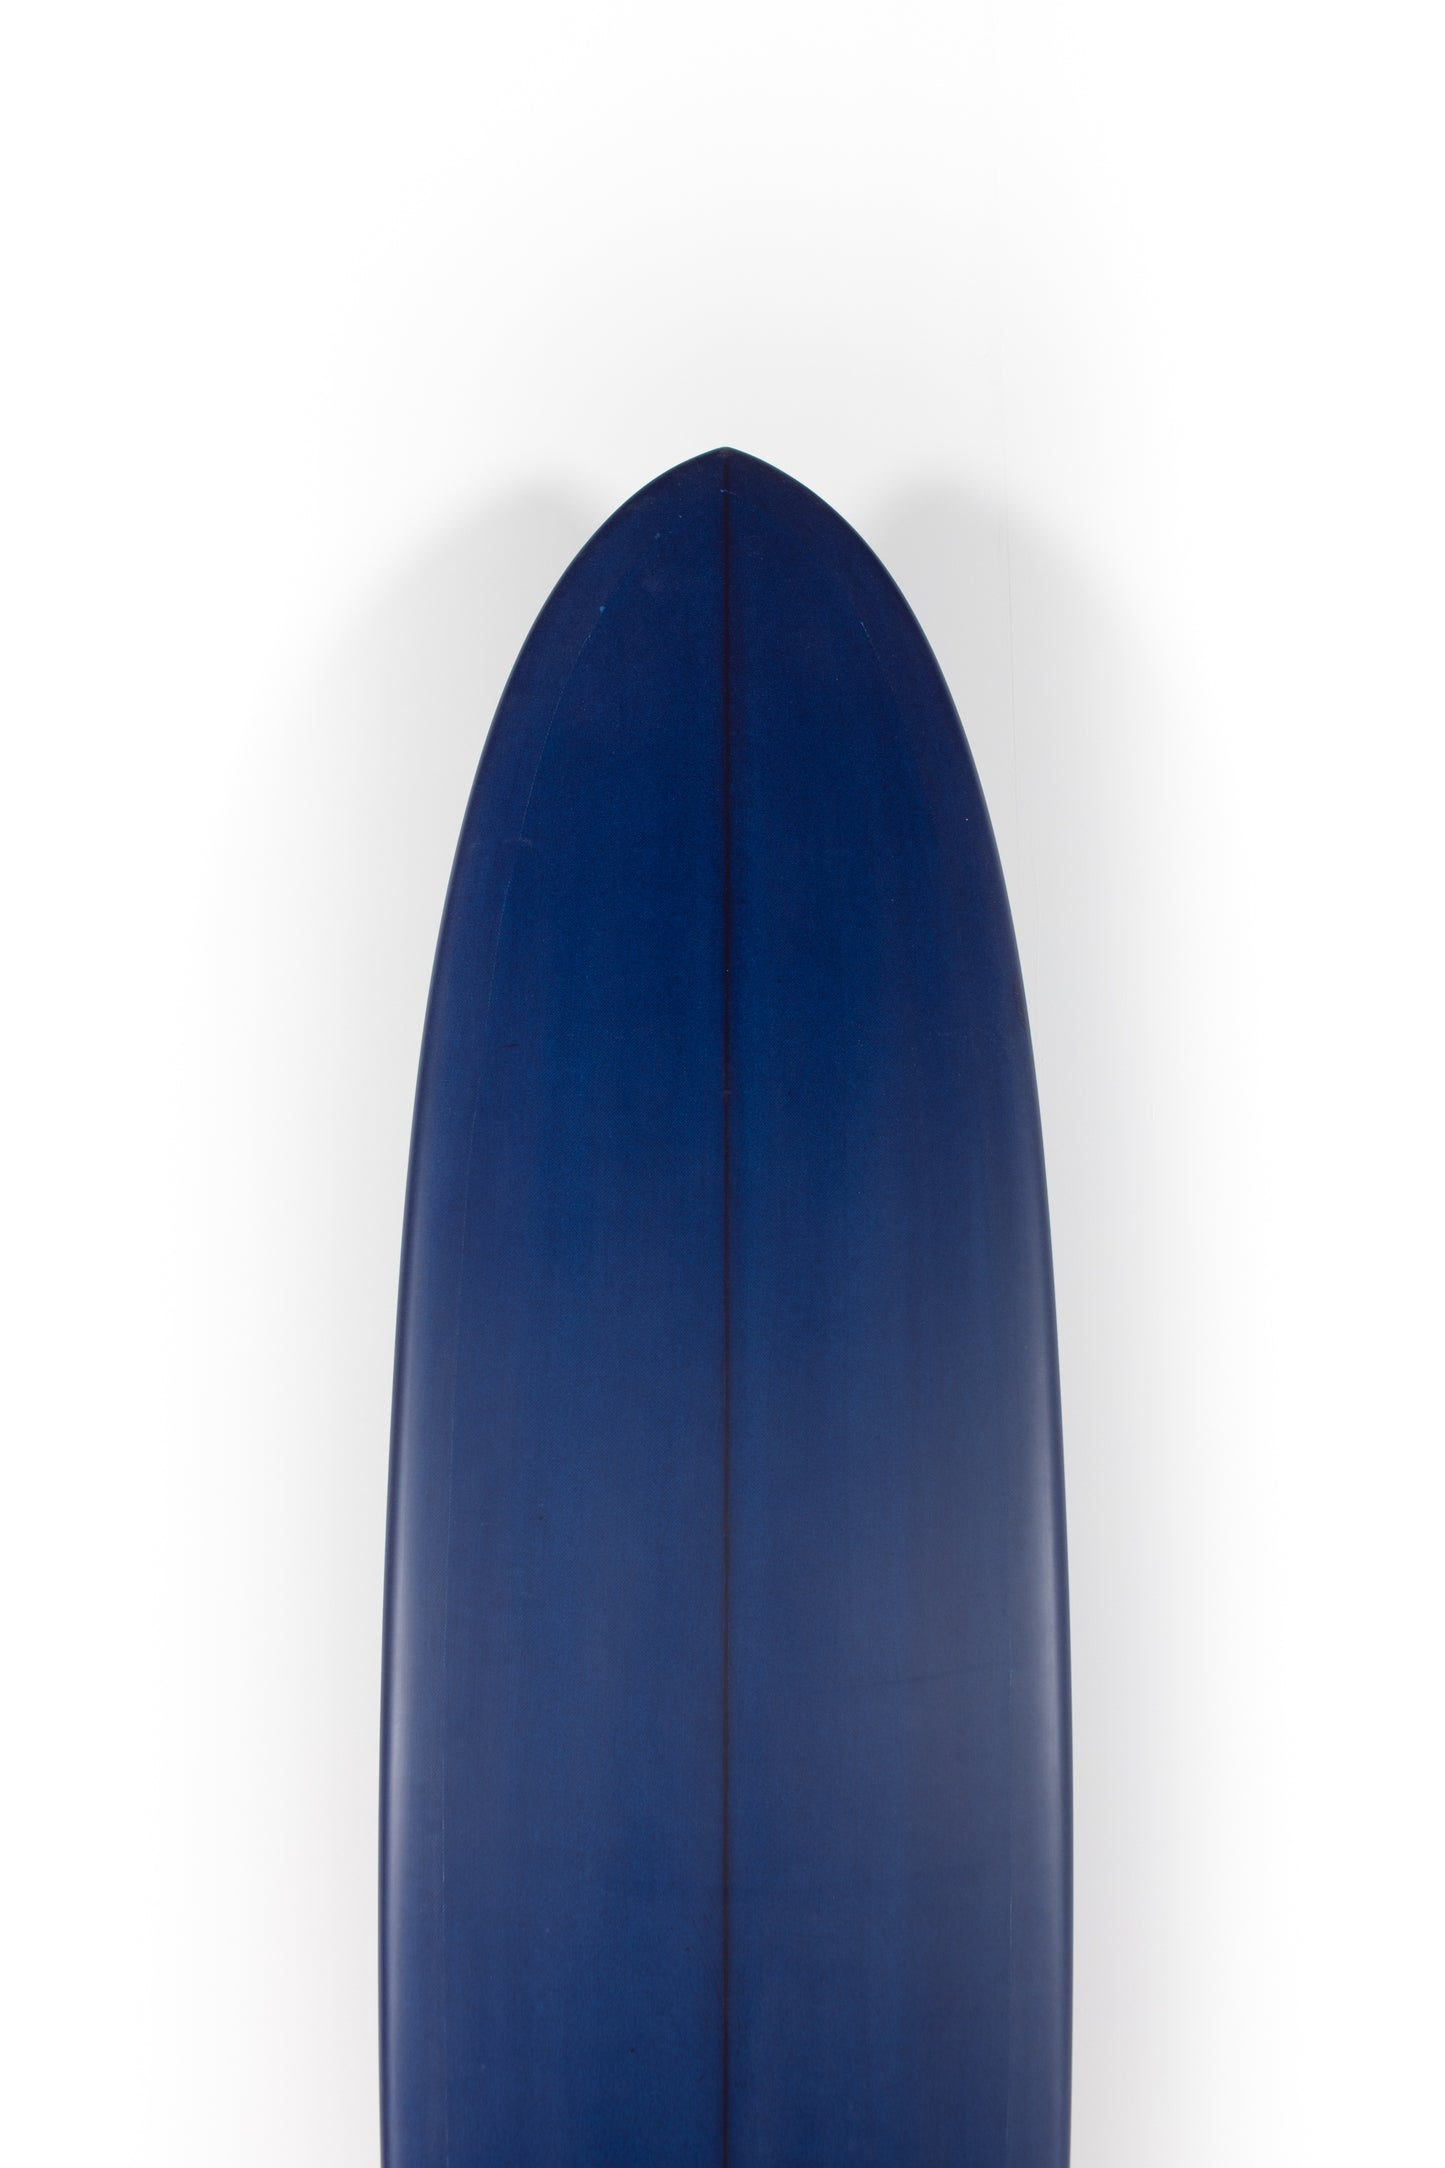 
                  
                    Pukas Surf Shop - McTavish Surfboard - RINCON by Bob McTavish - 7’10” x 21 3/4 x 3 - Ref BM00787
                  
                